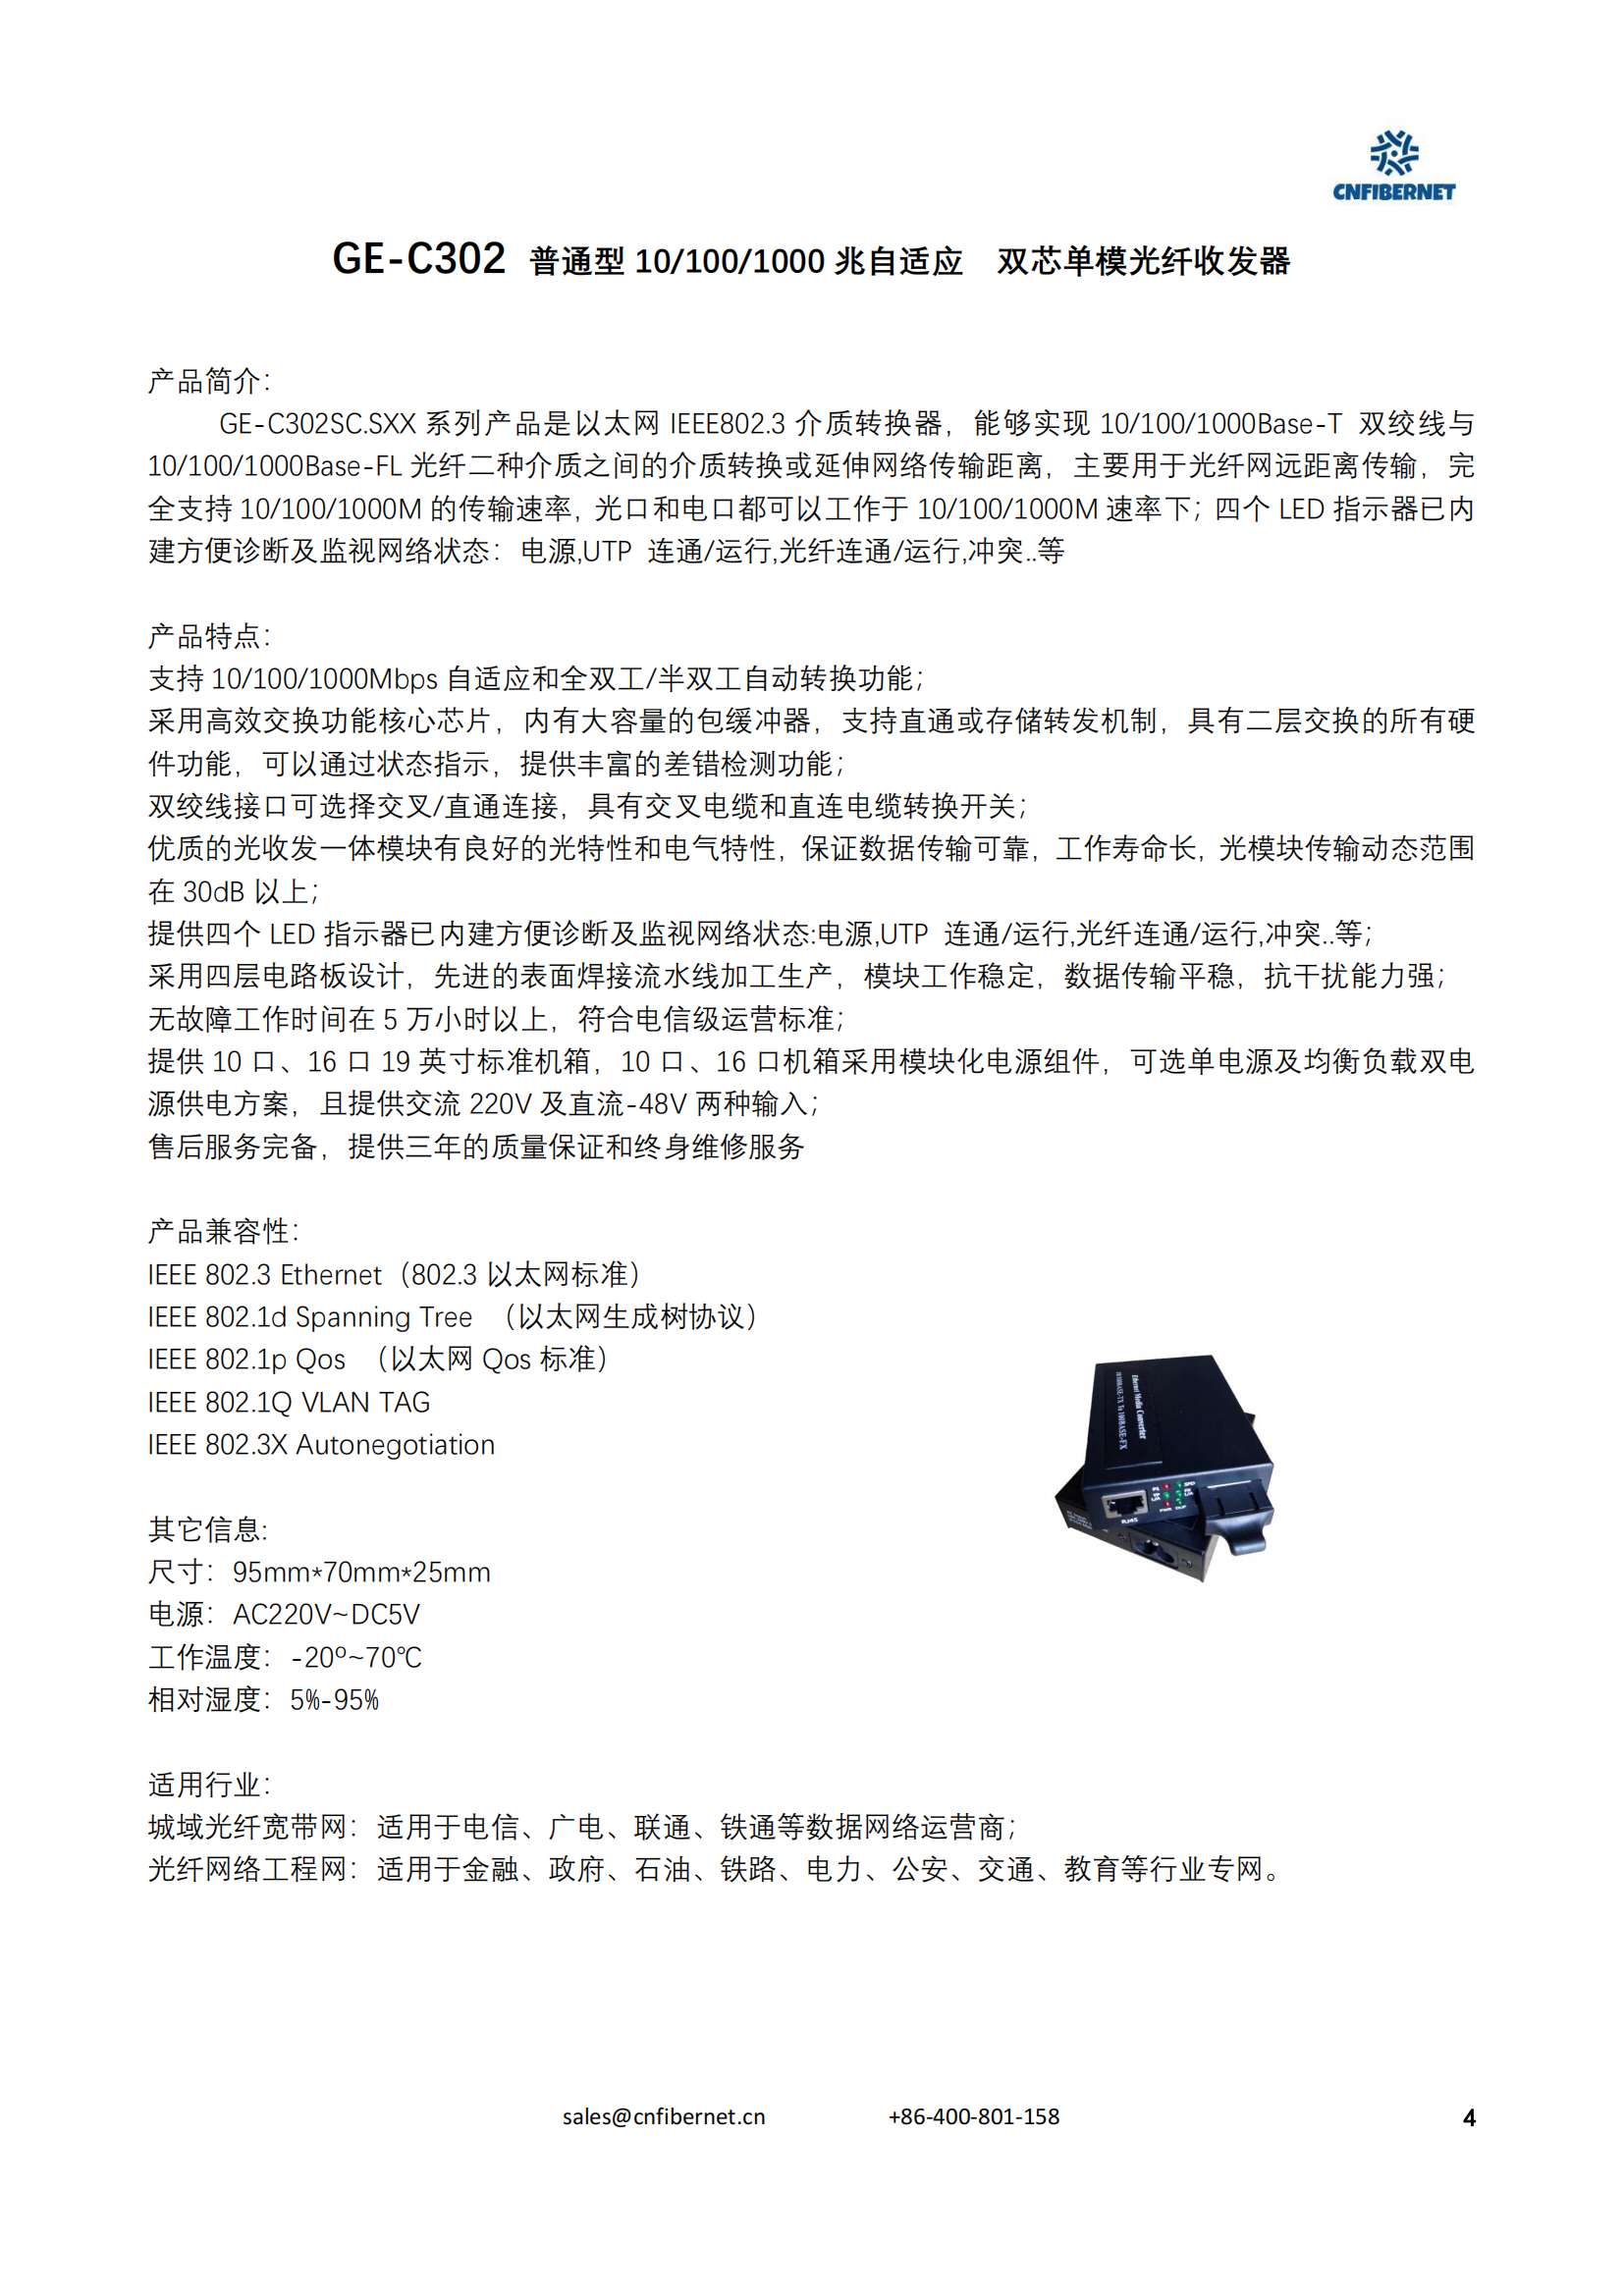 GE-C302SC.80 dual-fiber 1000M single-mode fiber optic transceiver (80KM)